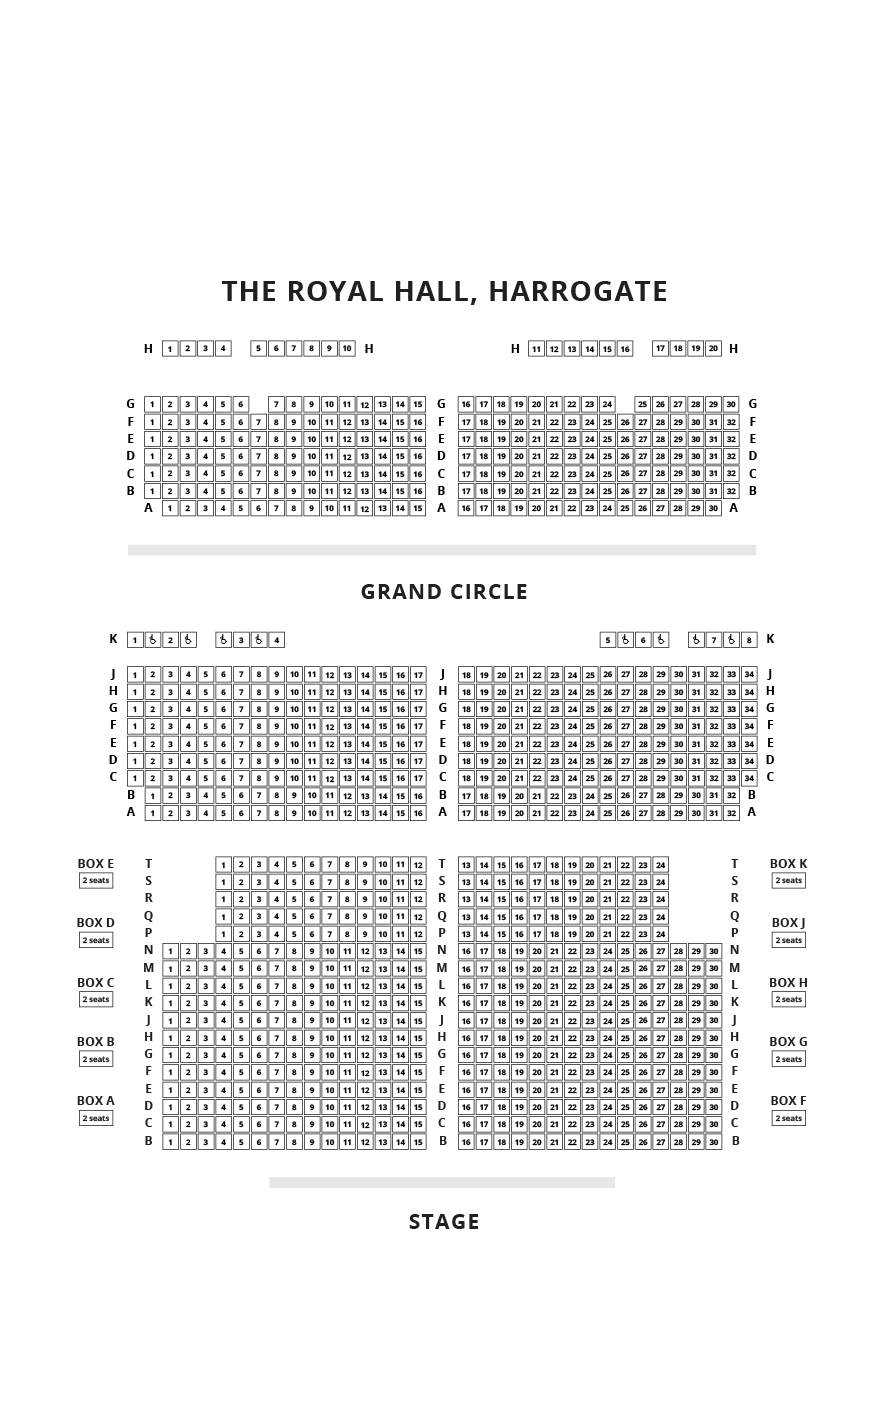 The Royal Hall, Harrogate